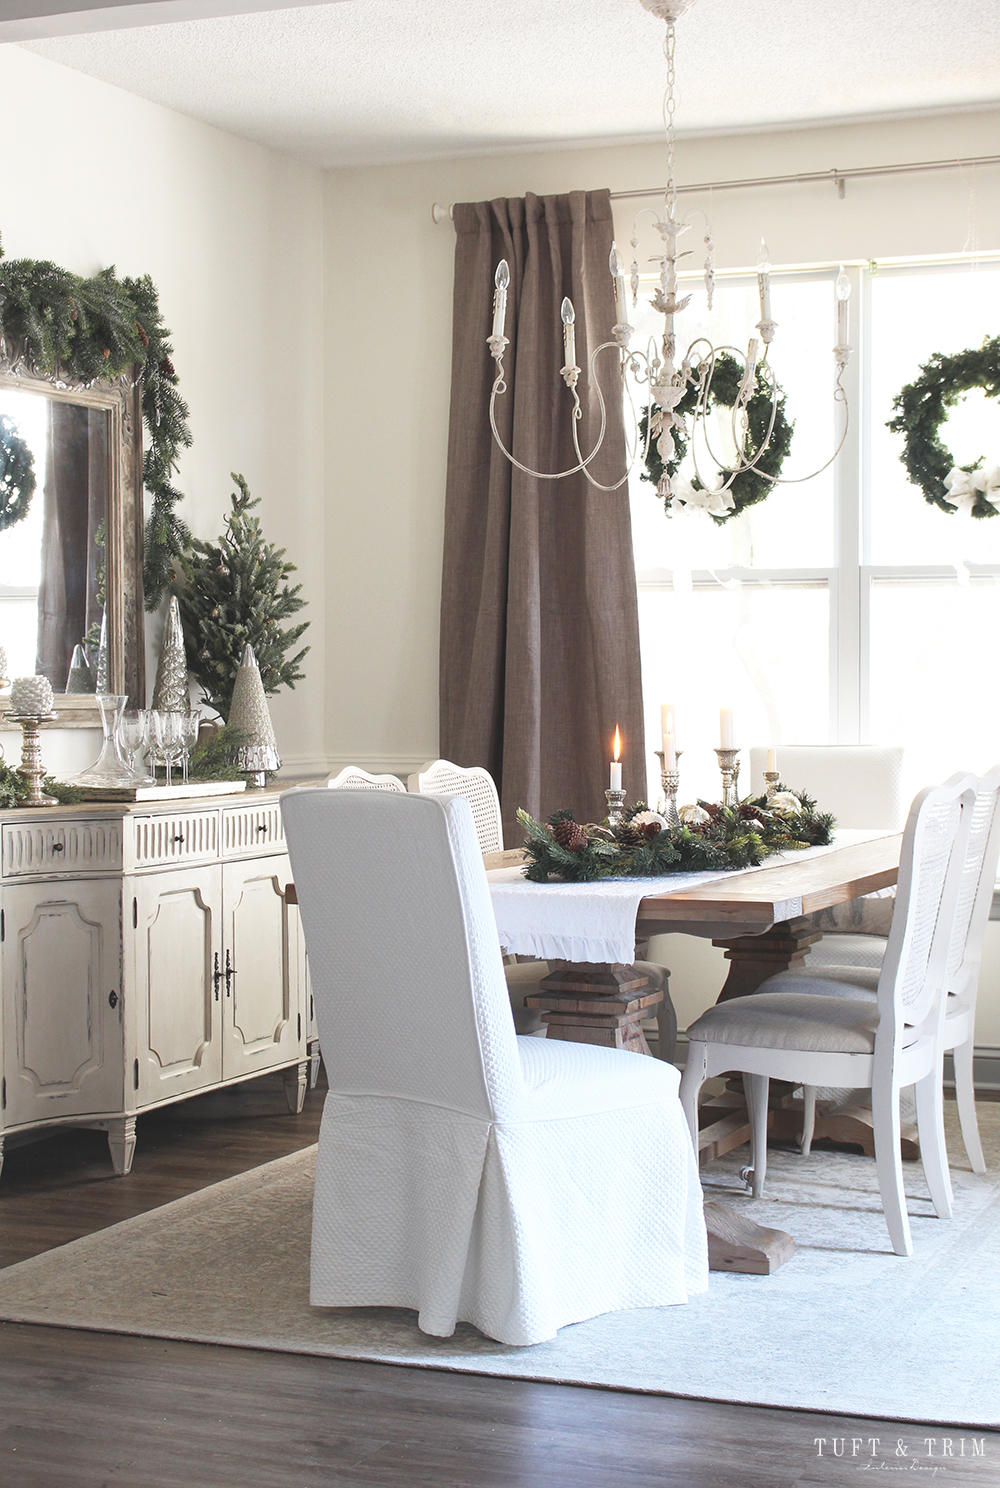 Elegant Christmas Home Tour Part 2: The Dining Room. Visit Tuft & Trim Interior Design for full tour!